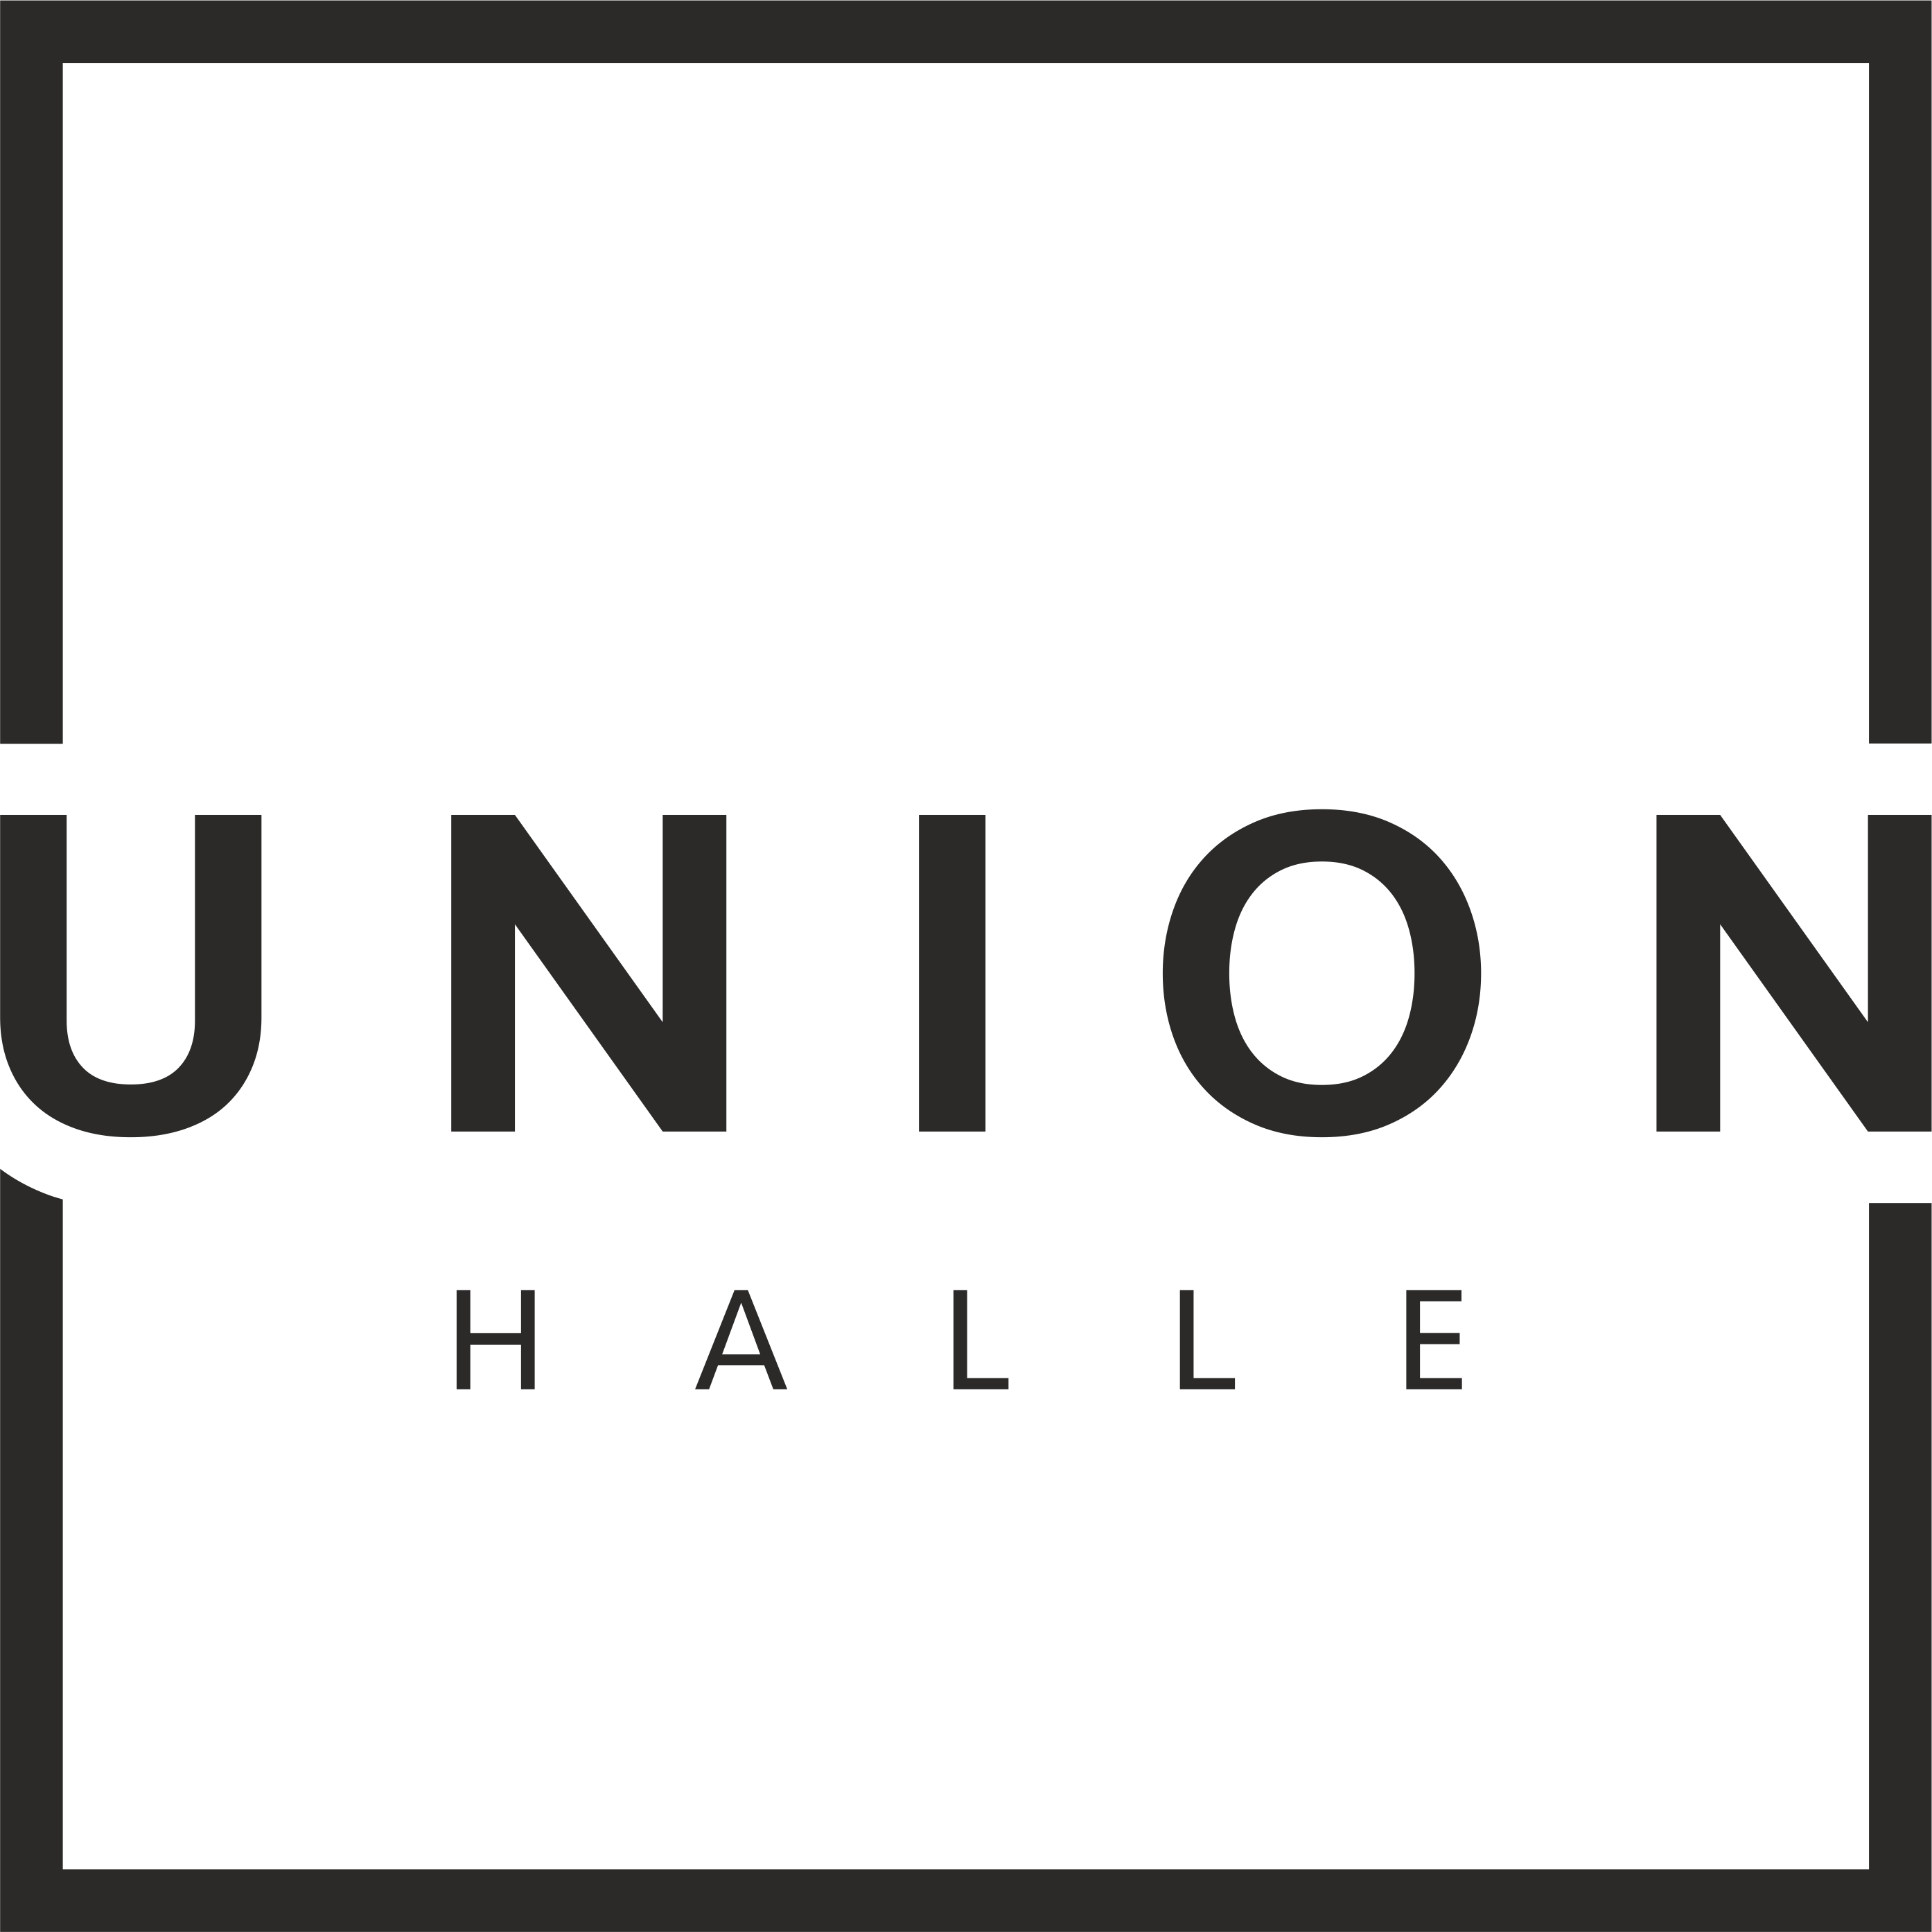 eventlocations-frankurt-union-halle-event-location-logo-schwarz